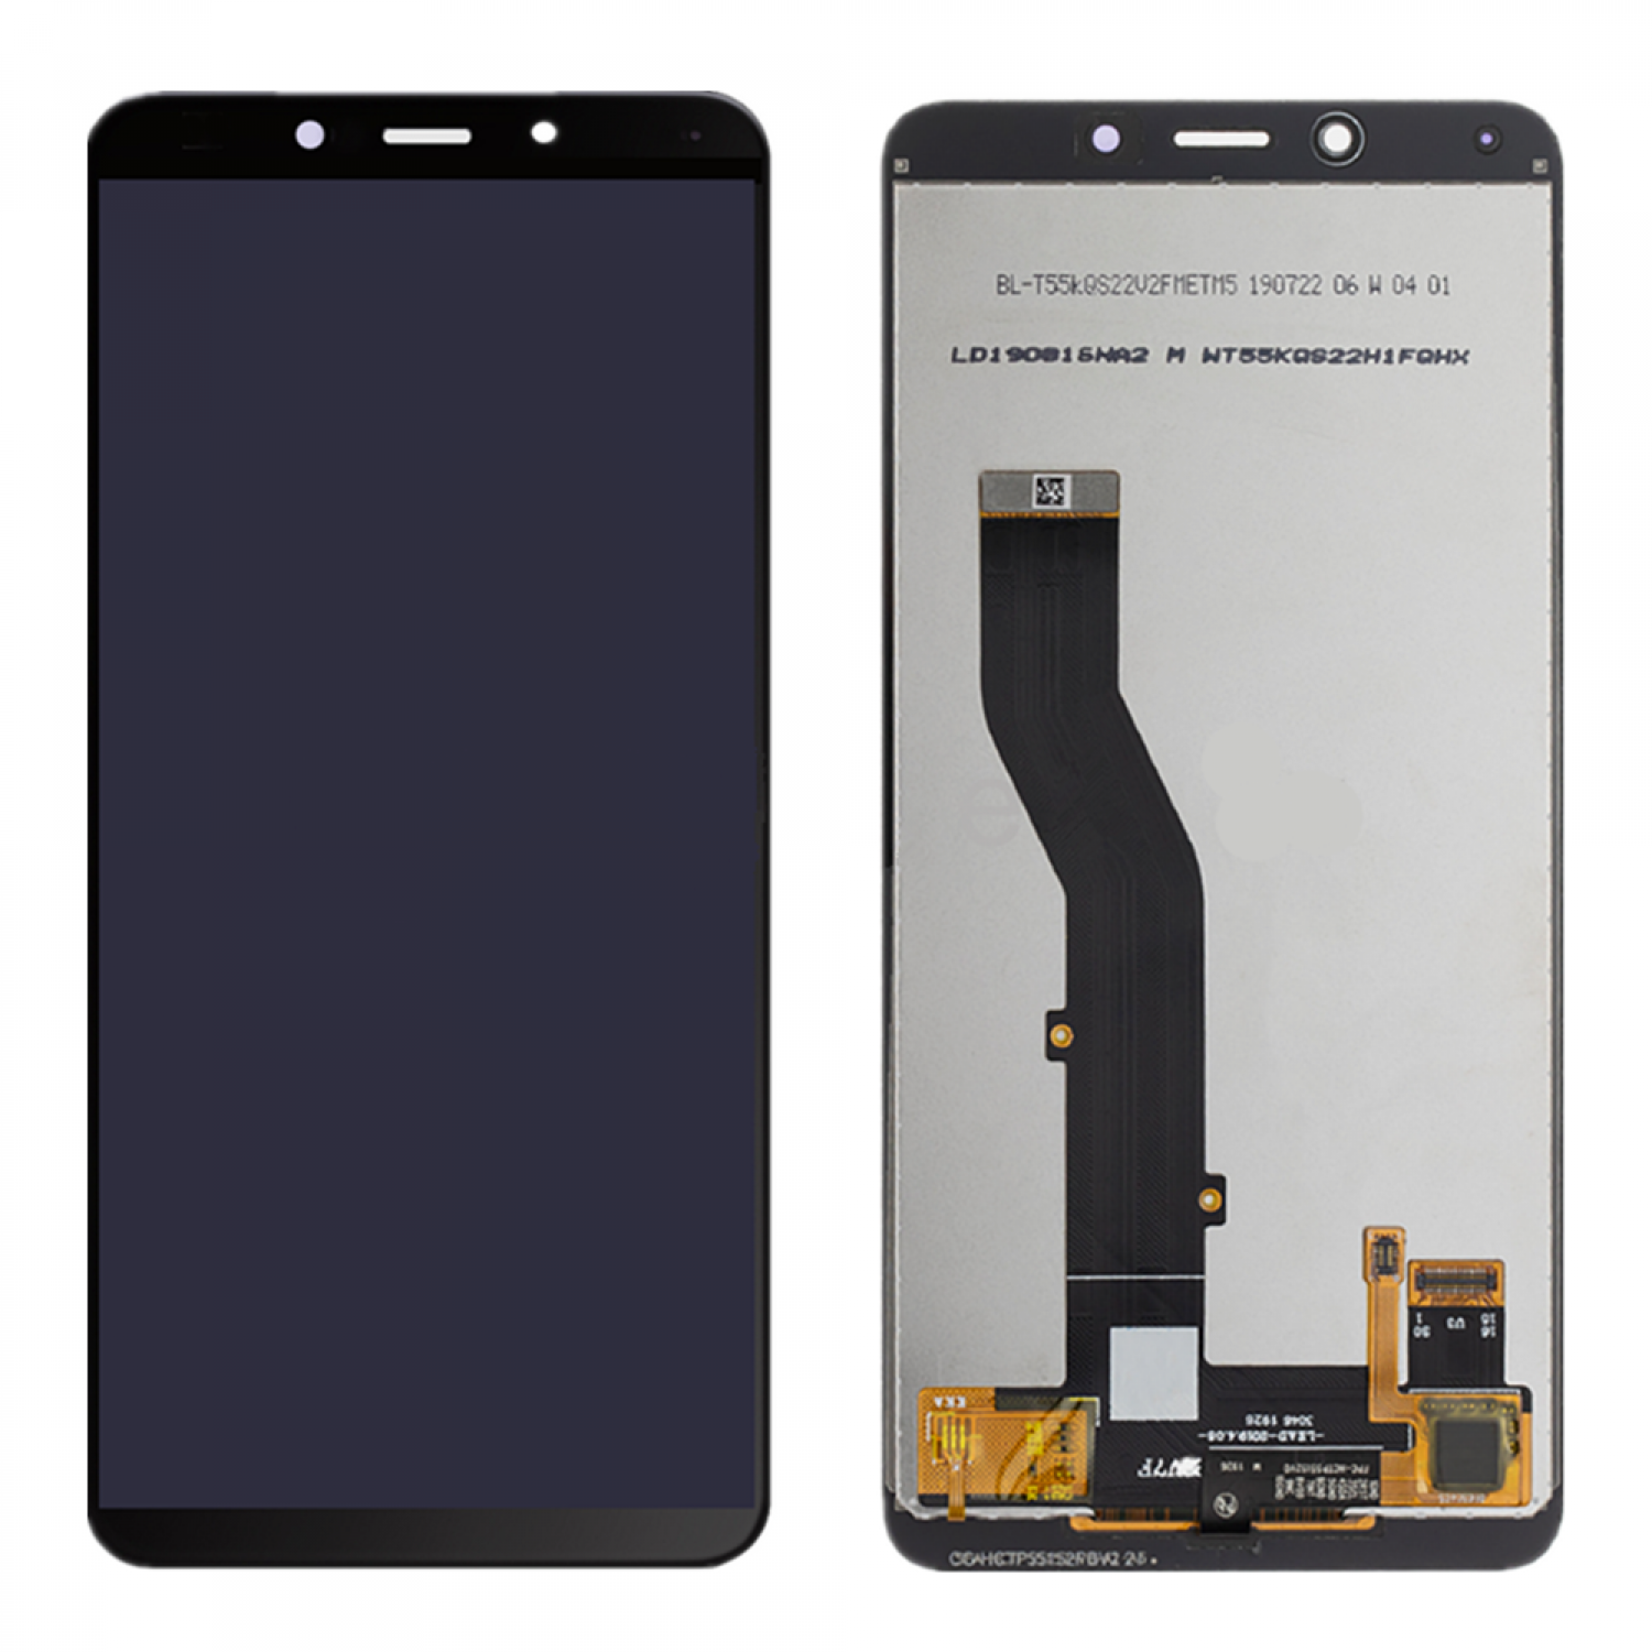 LG LCD digitizer assembly for LG K20 2019